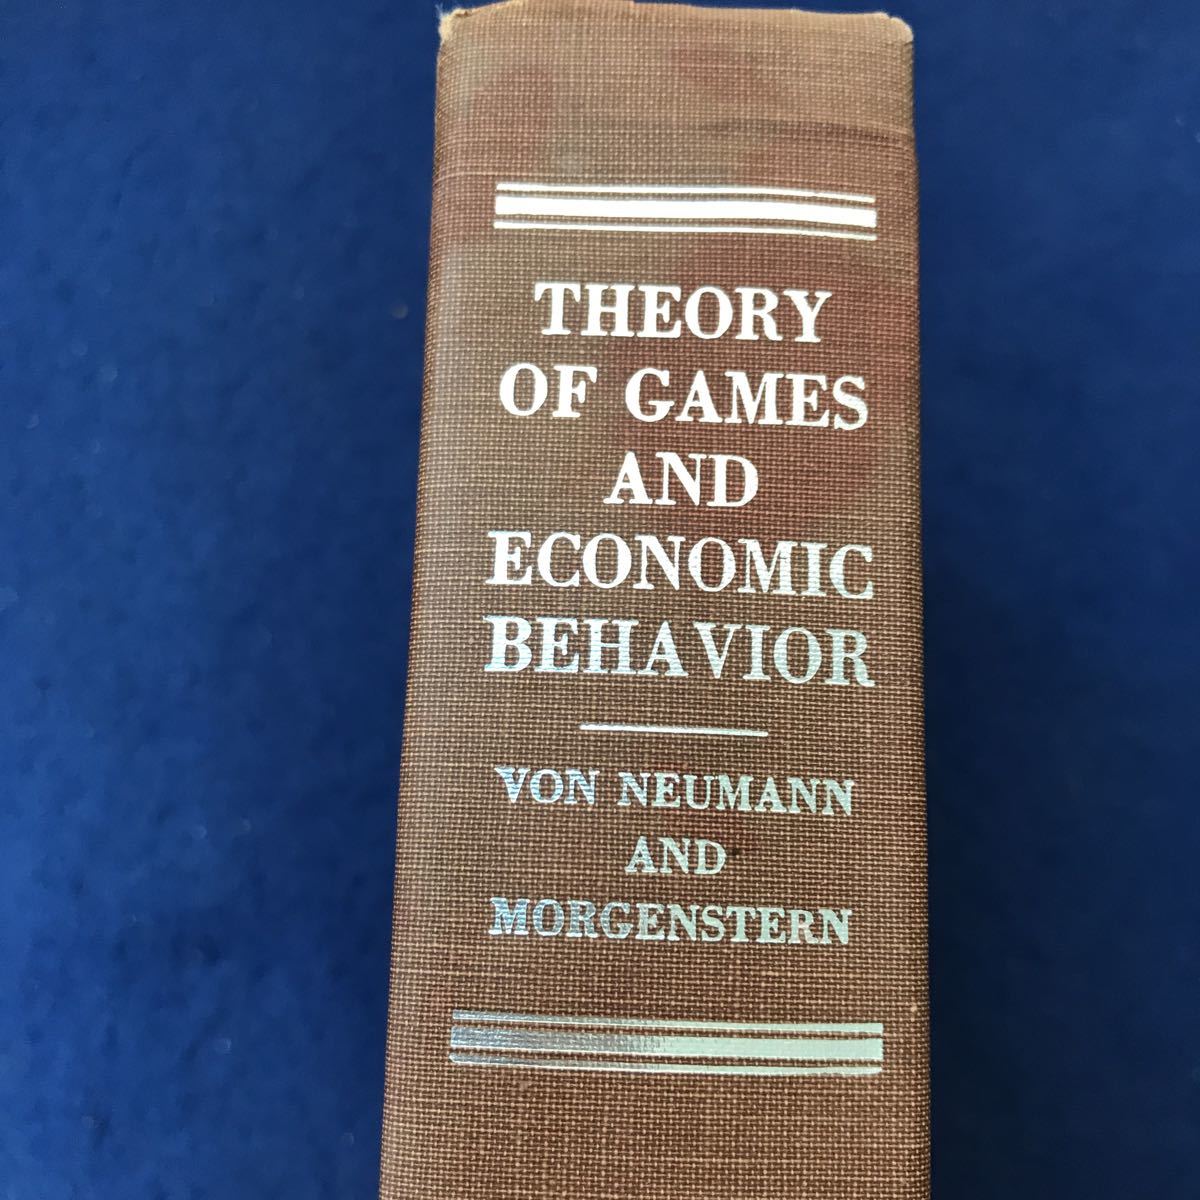 G09-005 THEORY OF GAMES AND ECONOMIC BEHAVIOR VON NEUMANN AND MORGENSTERN PRINCETON